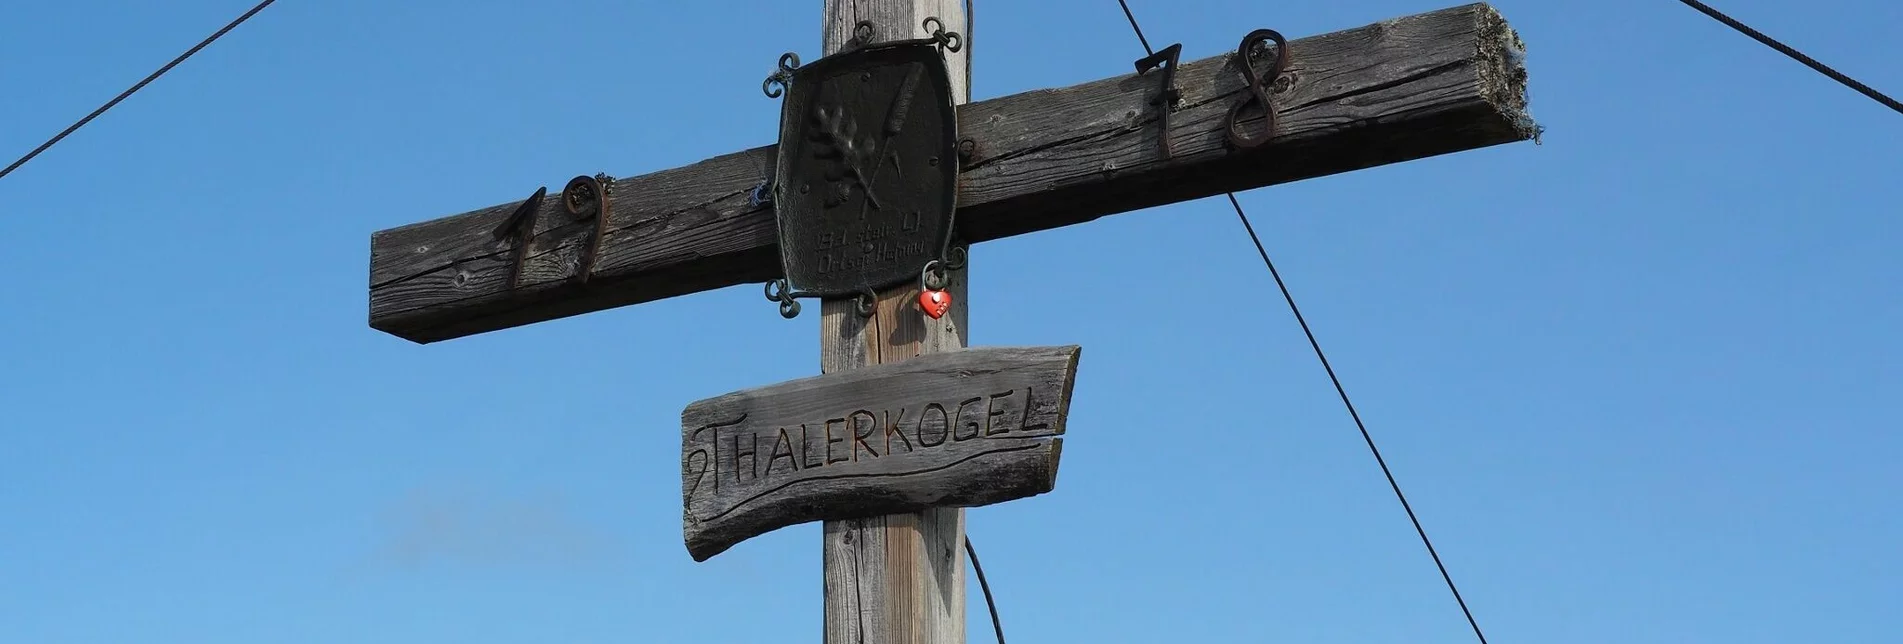 Wanderung Thalerkogel - Touren-Impression #1 | © Tourismusverband ERZBERG LEOBEN